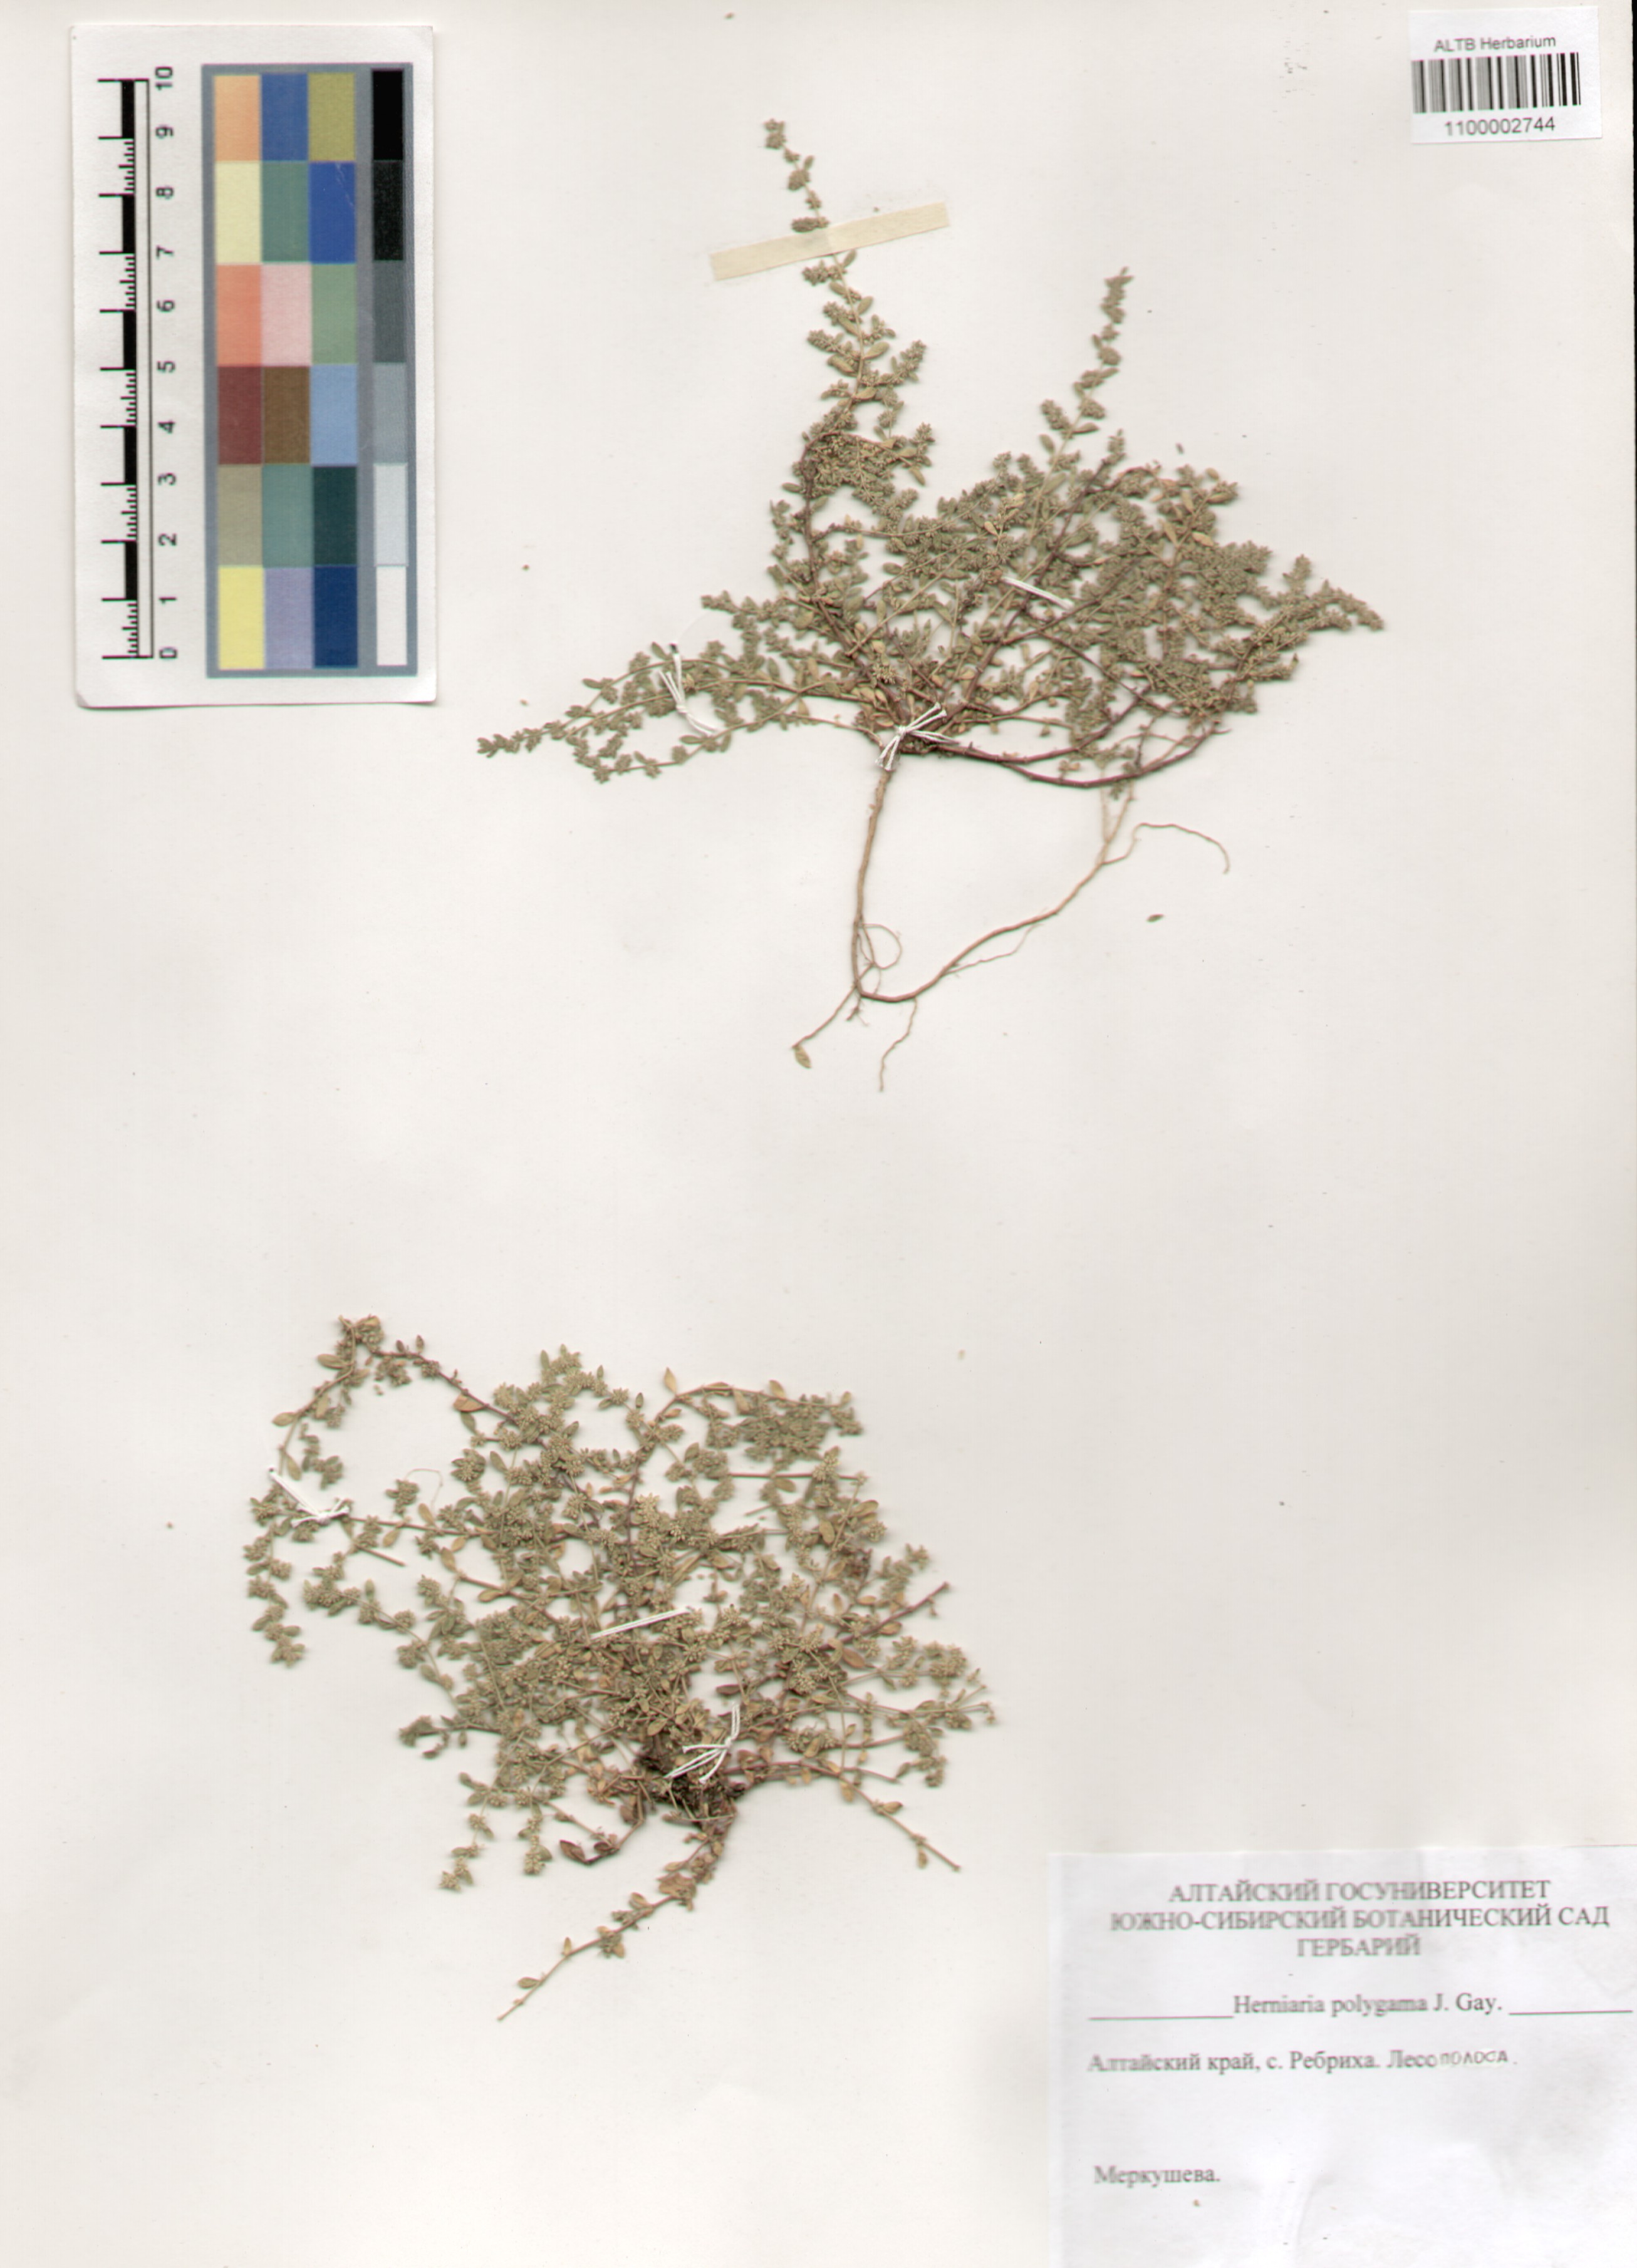 Caryophyllaceae,Herniaria polygama J. Gay.